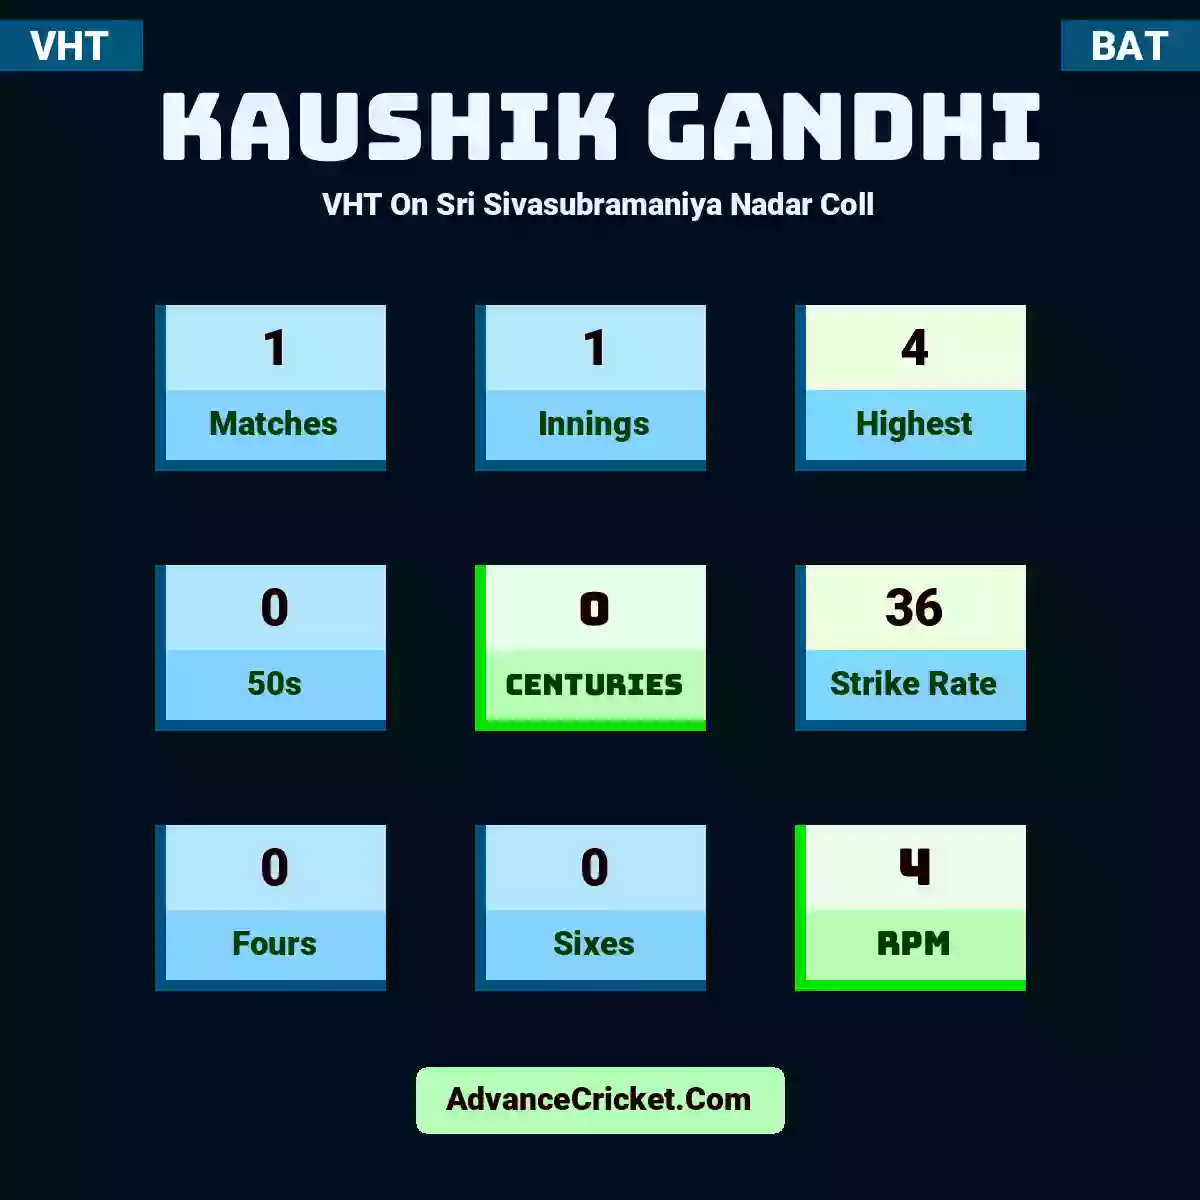 Kaushik Gandhi VHT  On Sri Sivasubramaniya Nadar Coll, Kaushik Gandhi played 1 matches, scored 4 runs as highest, 0 half-centuries, and 0 centuries, with a strike rate of 36. K.Gandhi hit 0 fours and 0 sixes, with an RPM of 4.